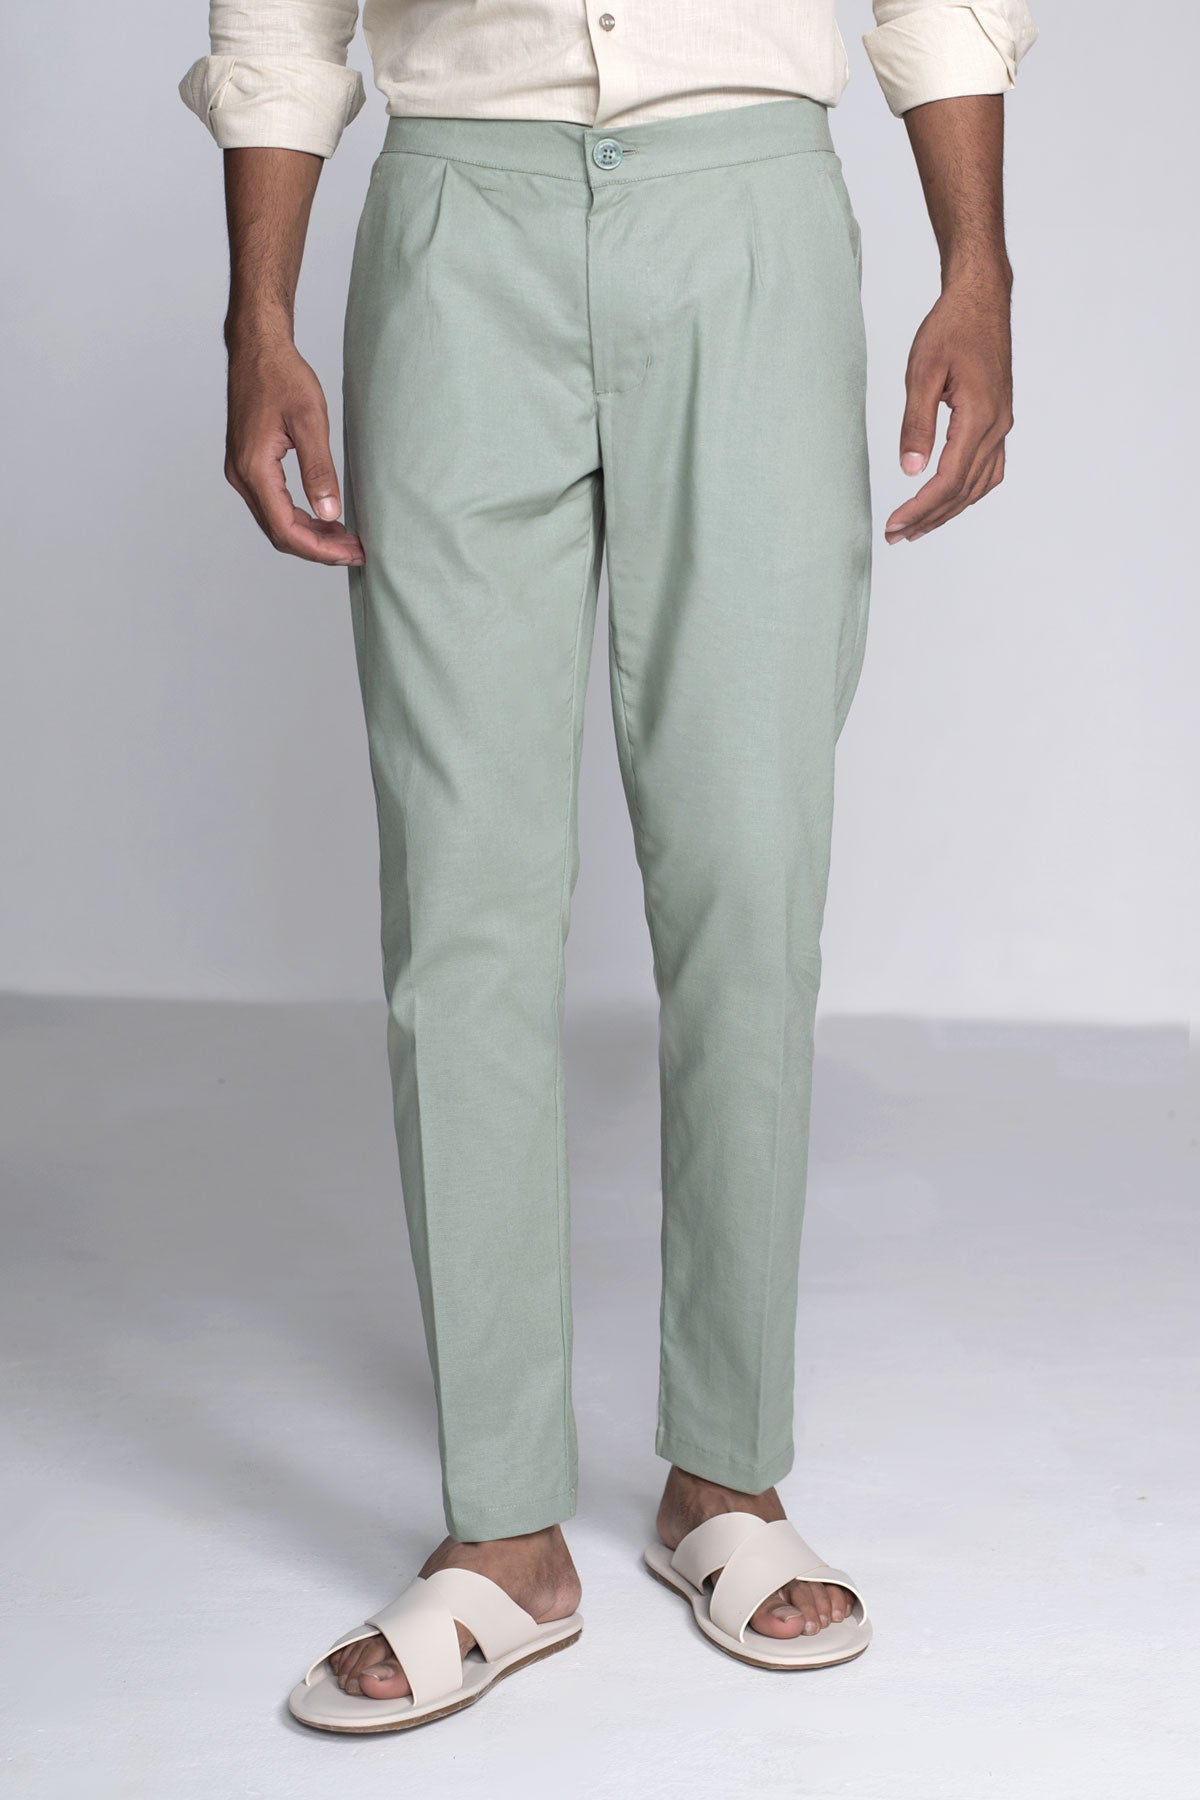 Wavsuf Pants for Men Drawstring Cotton Linen Green Trousers Size